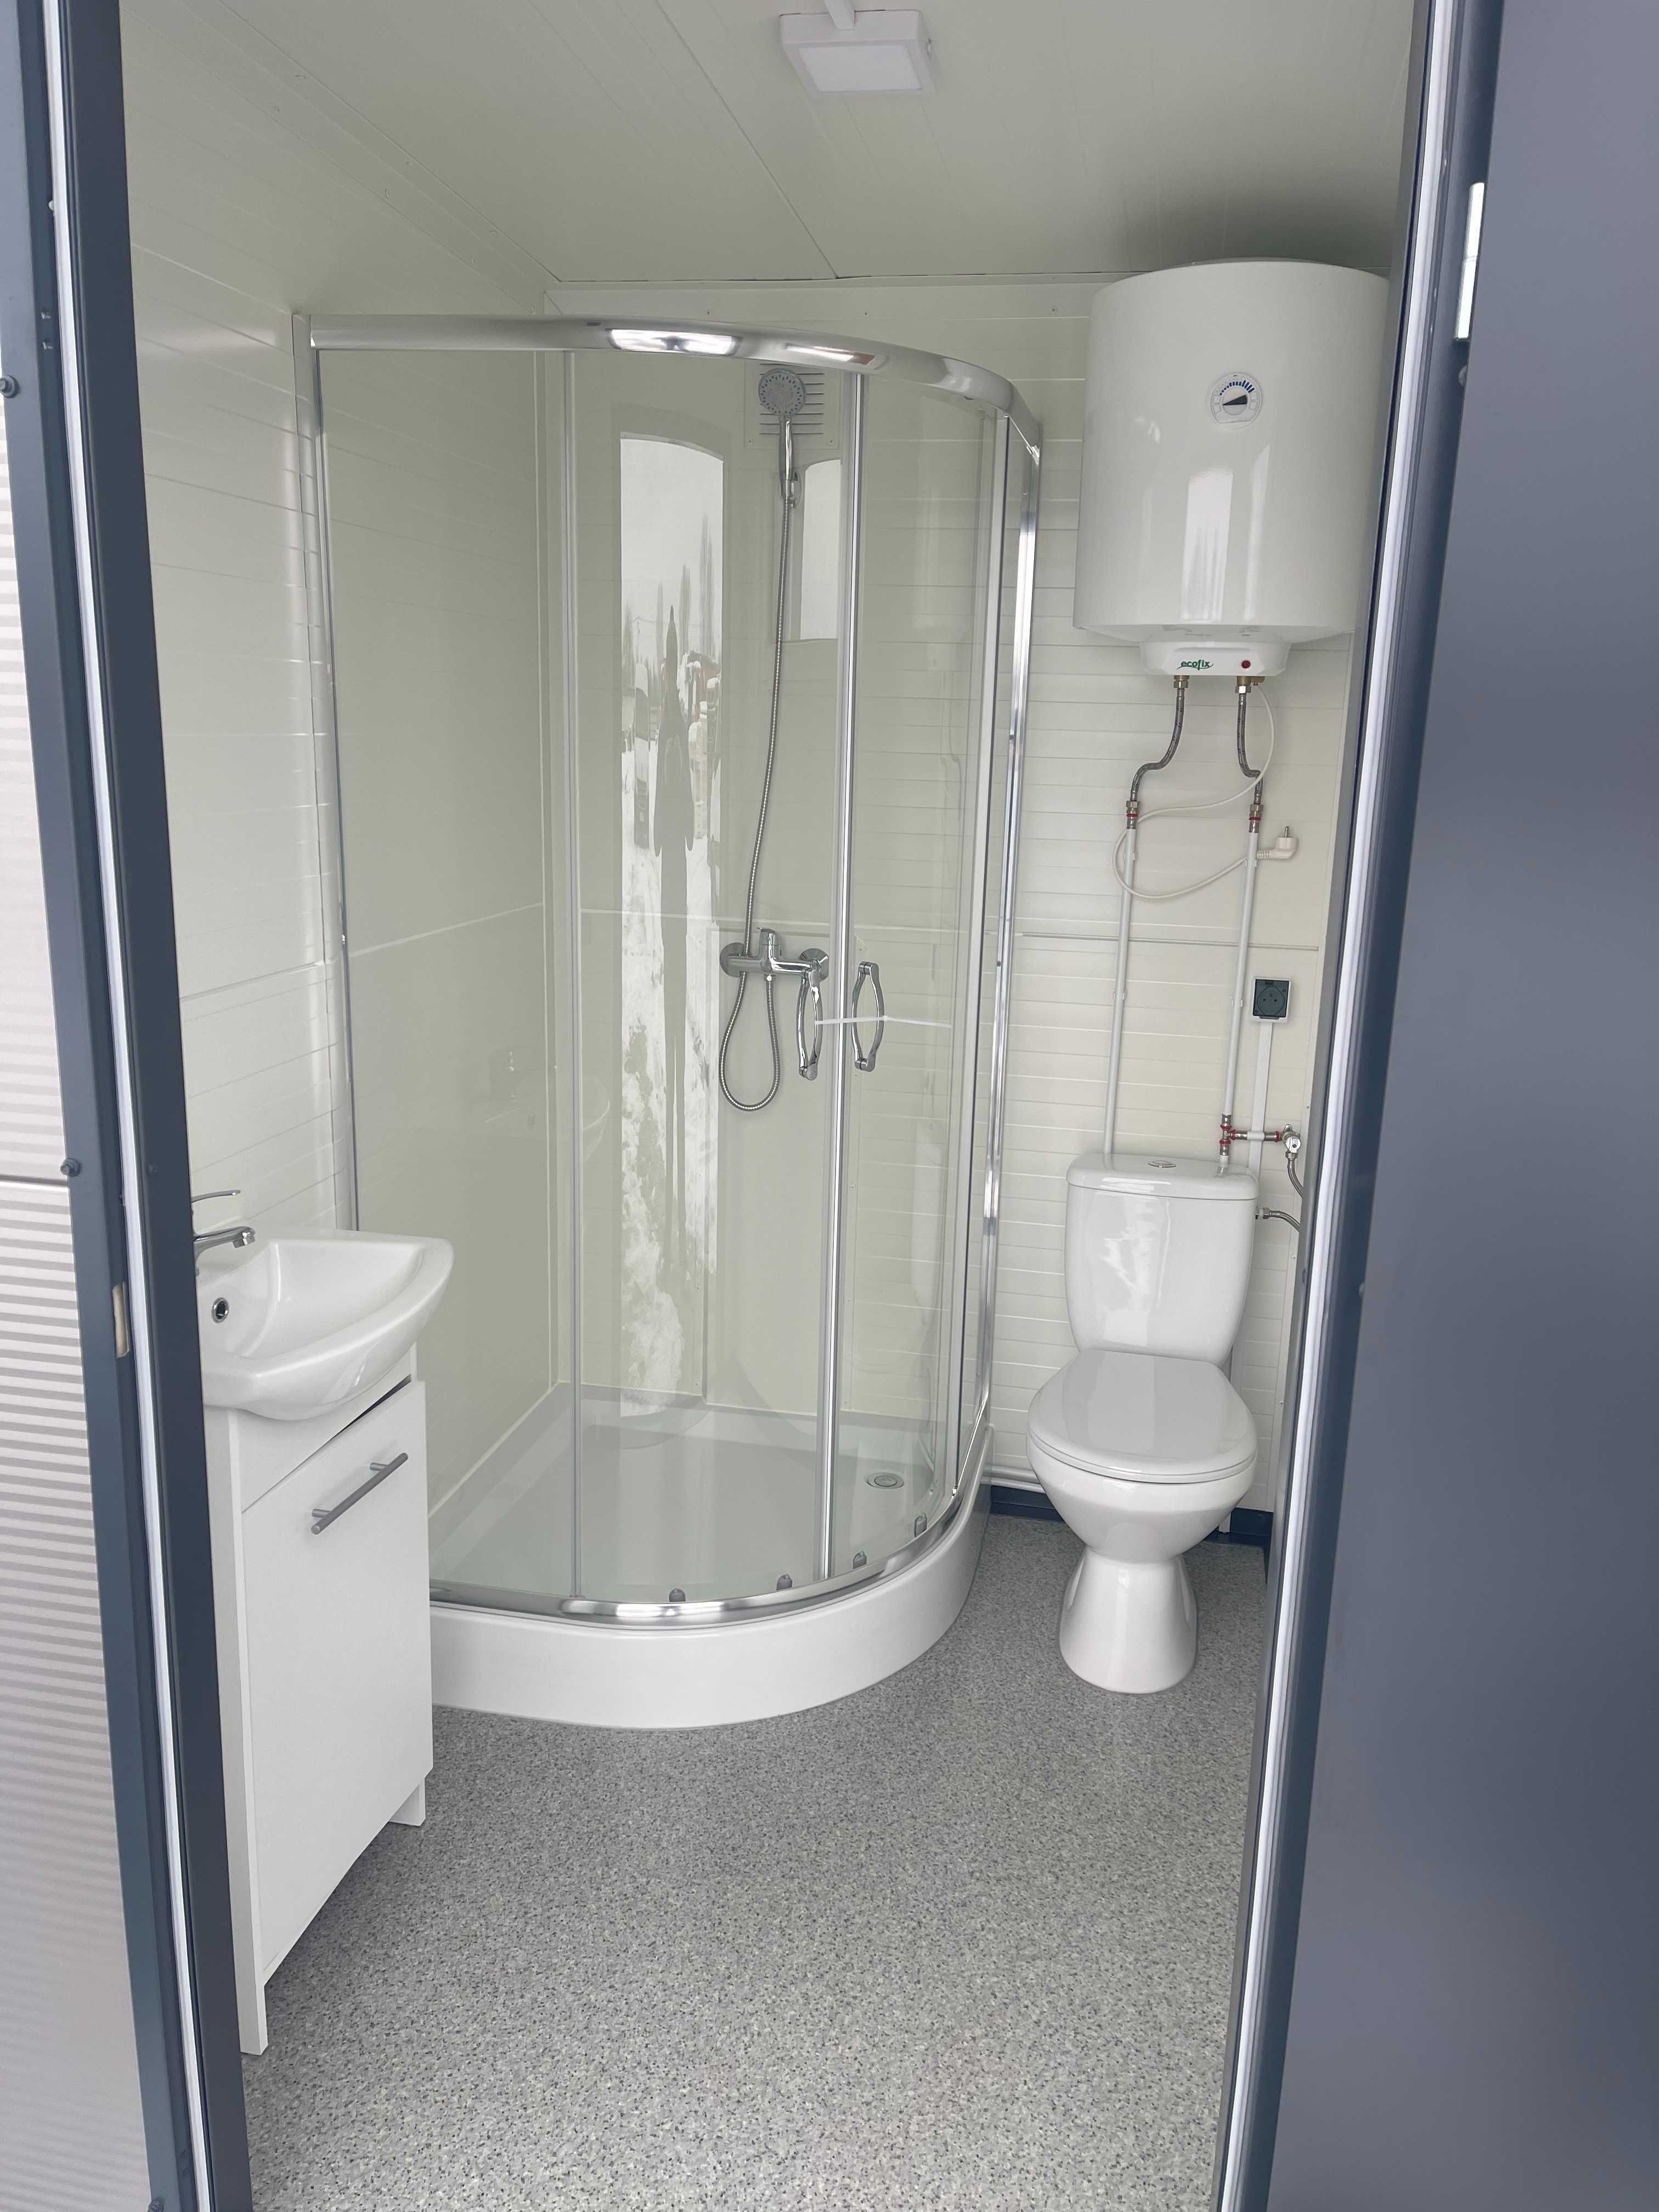 Pawilon kontener łazienka mobilna WC sanitarny prysznic camping